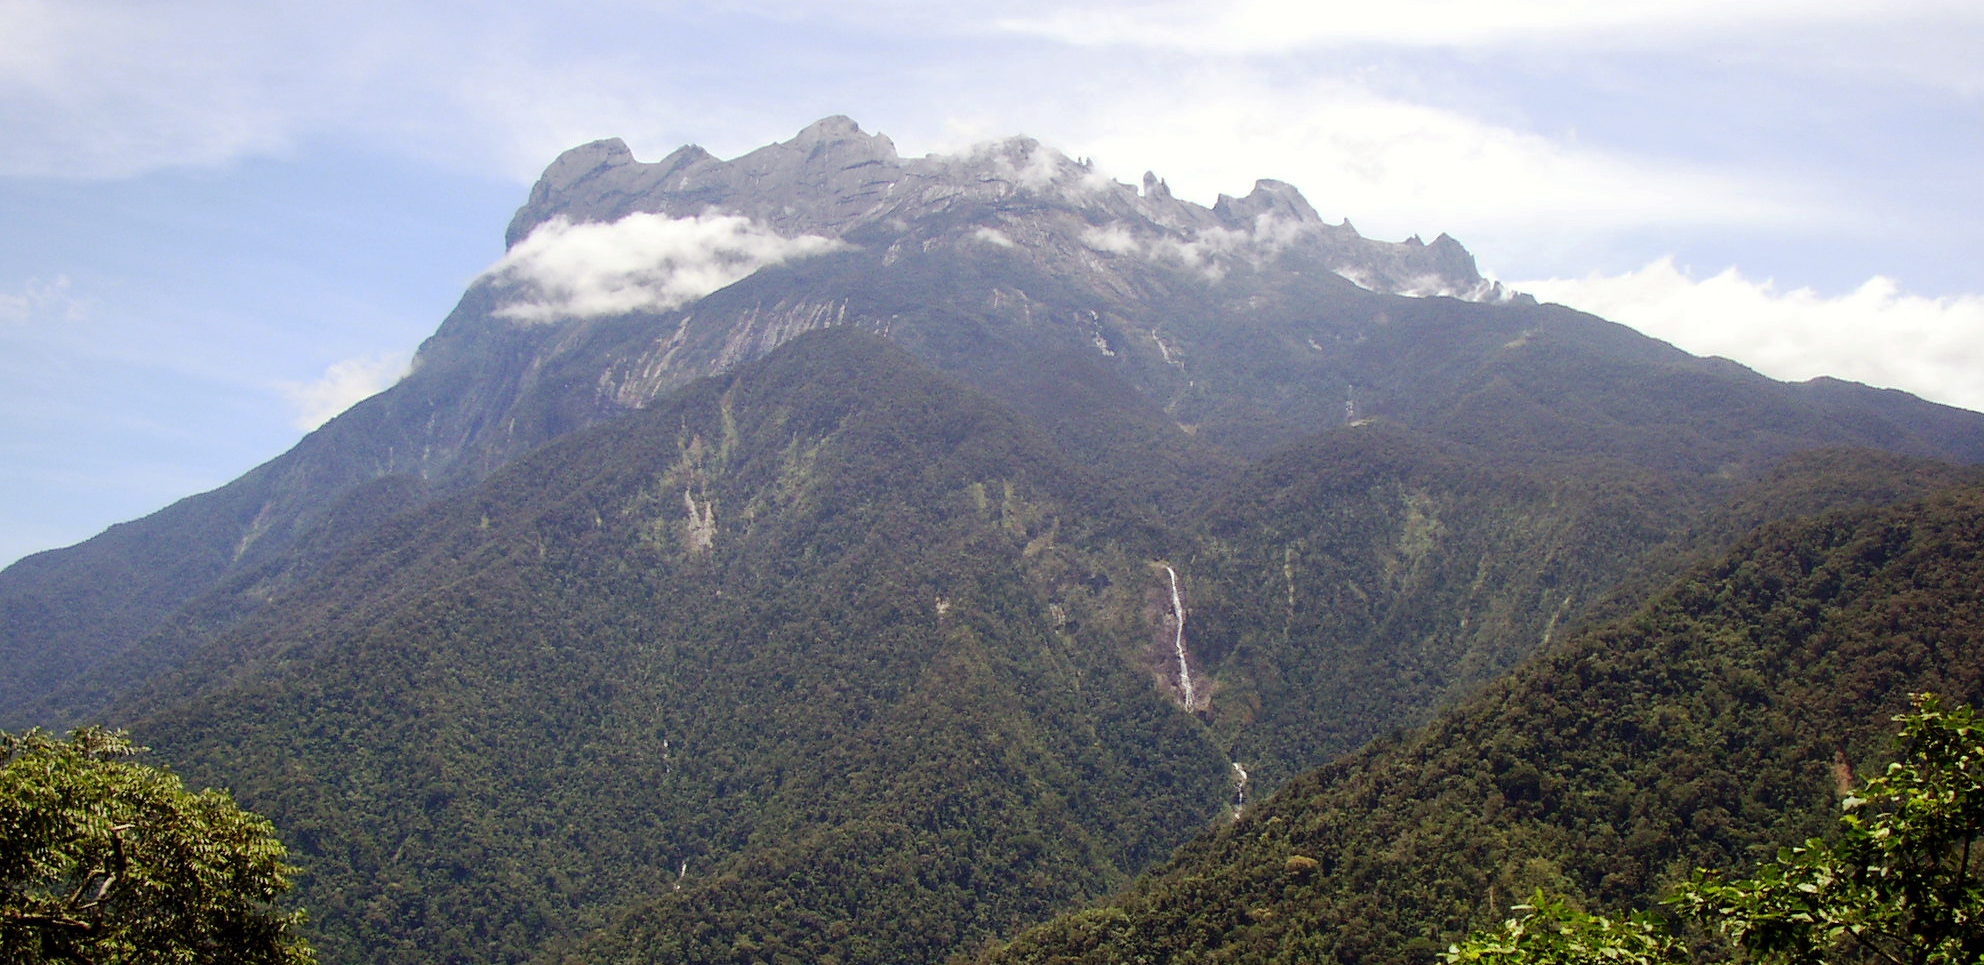 Man dies after having breathing difficulties on Mount Kinabalu